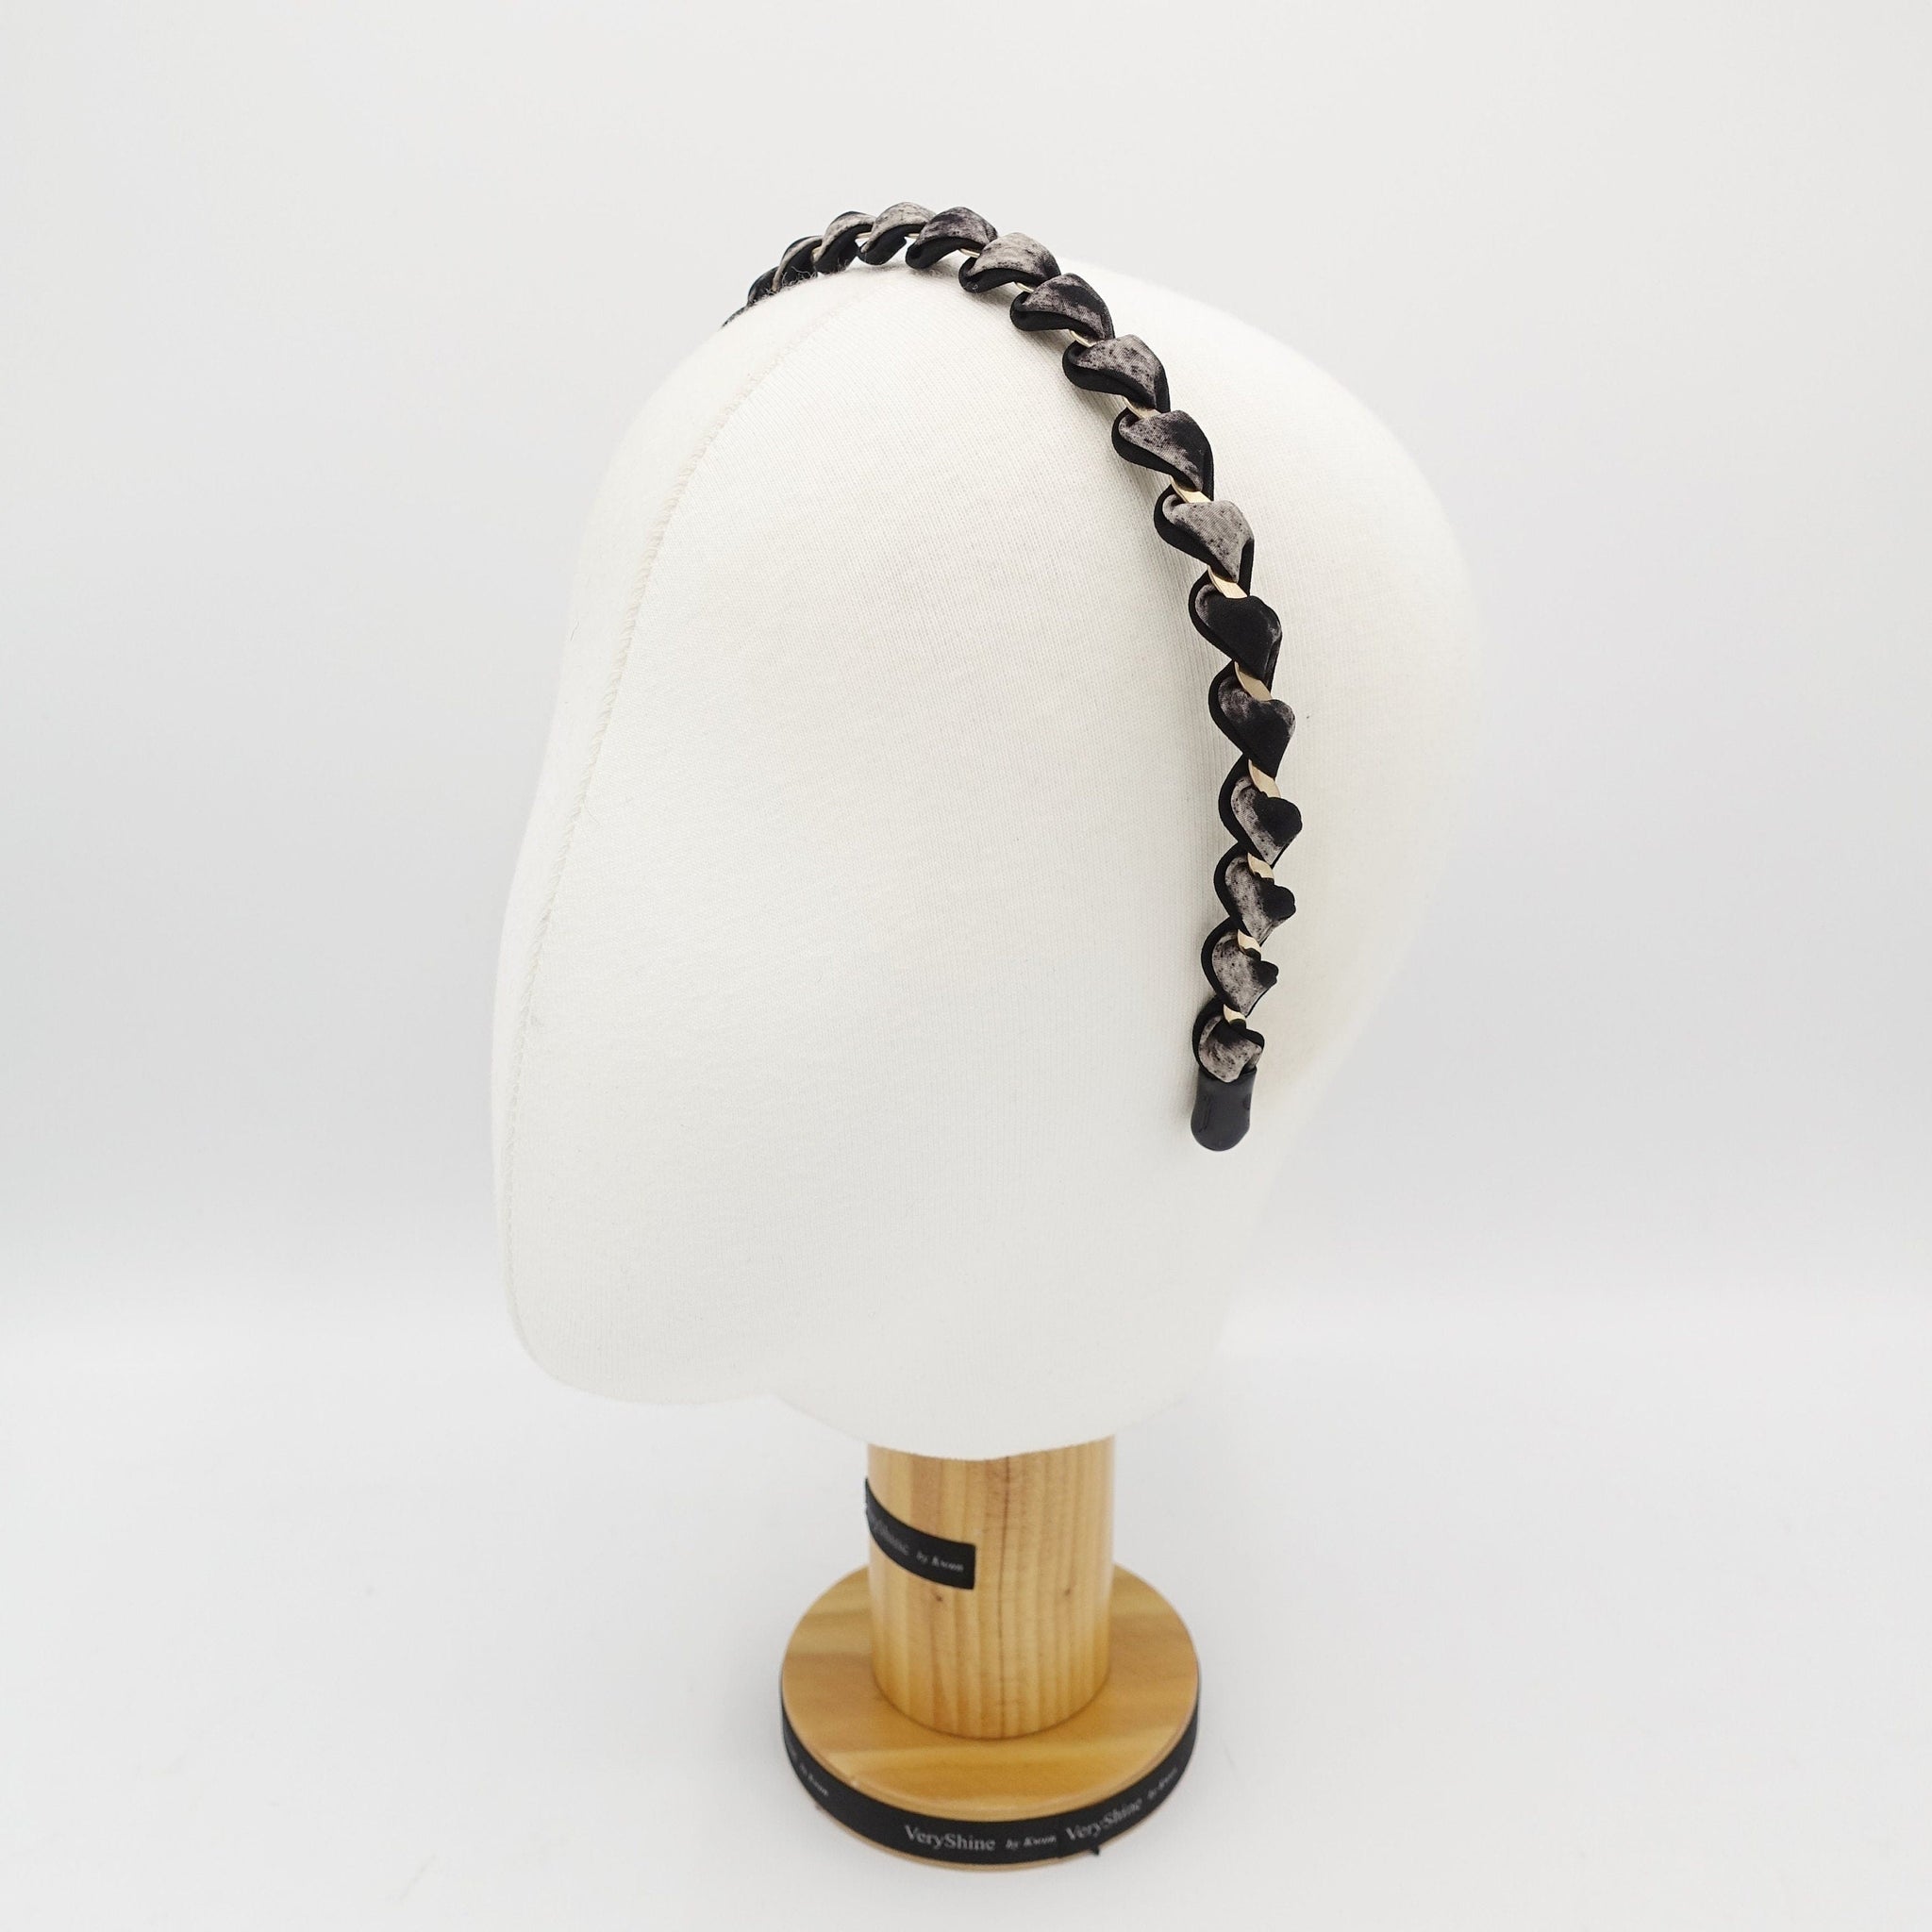 veryshine.com Headband leopard print spiral wrap headband thin hairband women hair accessory